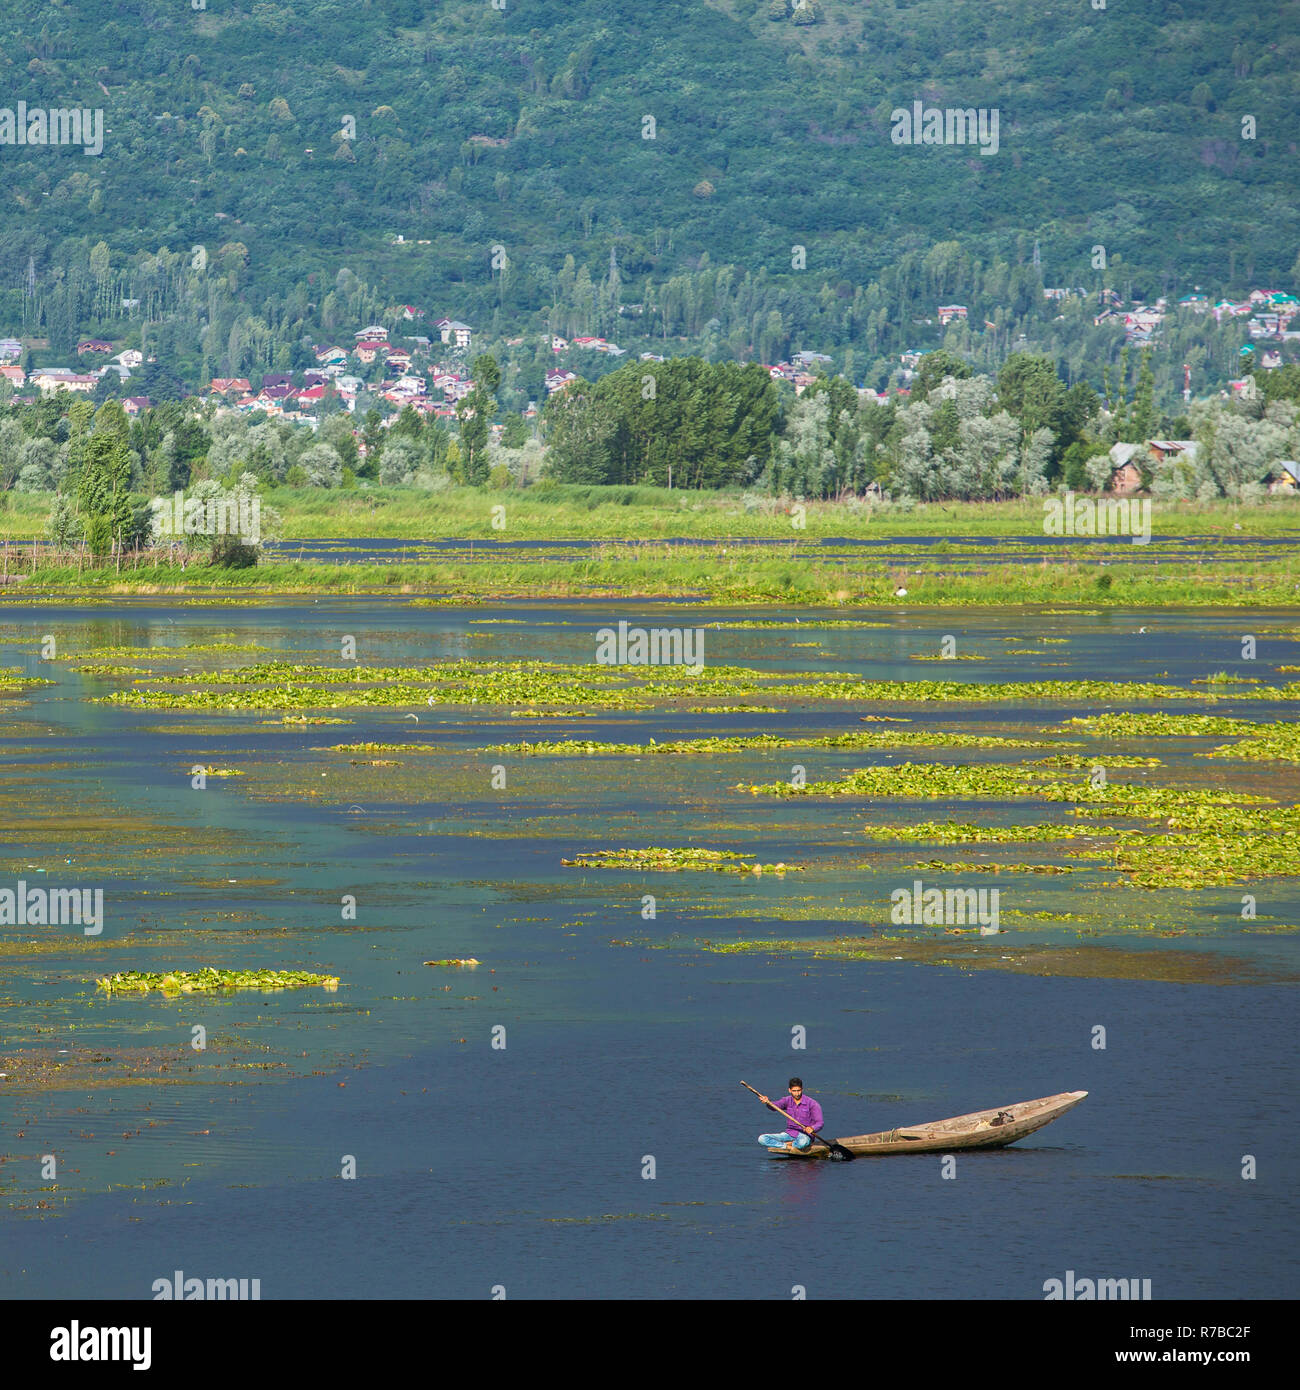 Man riding a shikara boat on the Dal lake in Srinagar, Kashmir, India. Stock Photo